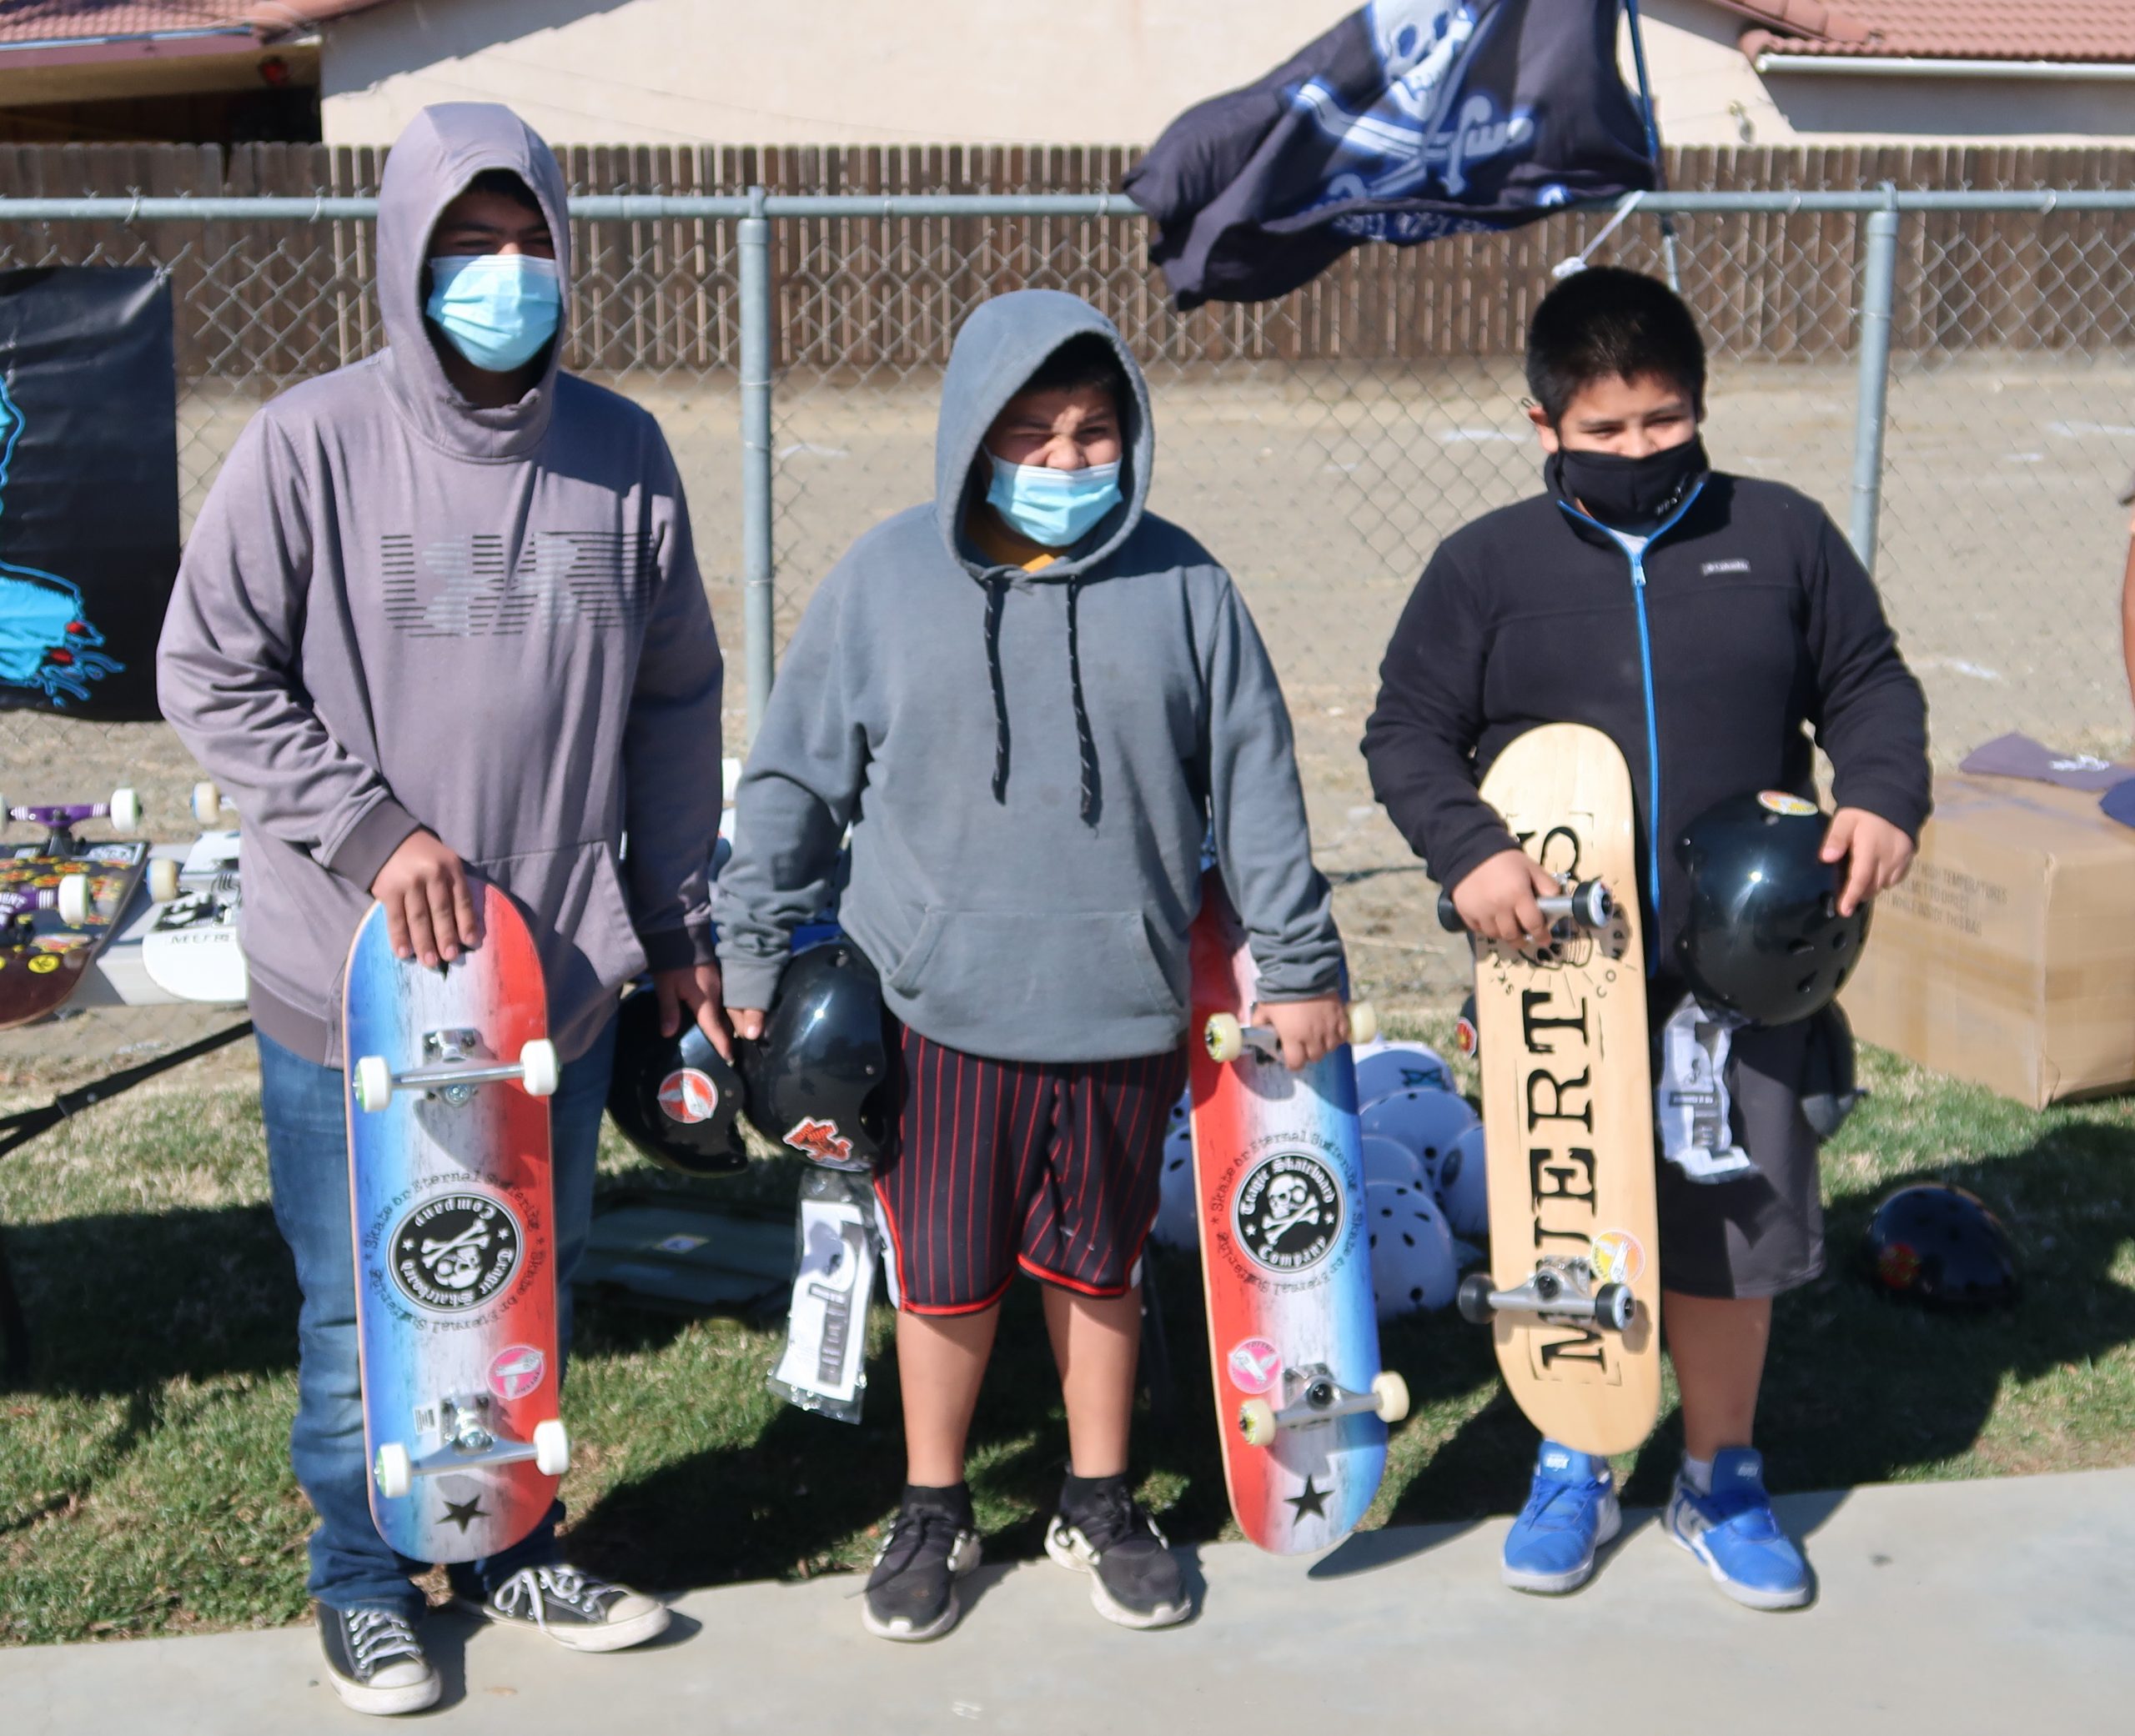 Three kids hold skateboards.